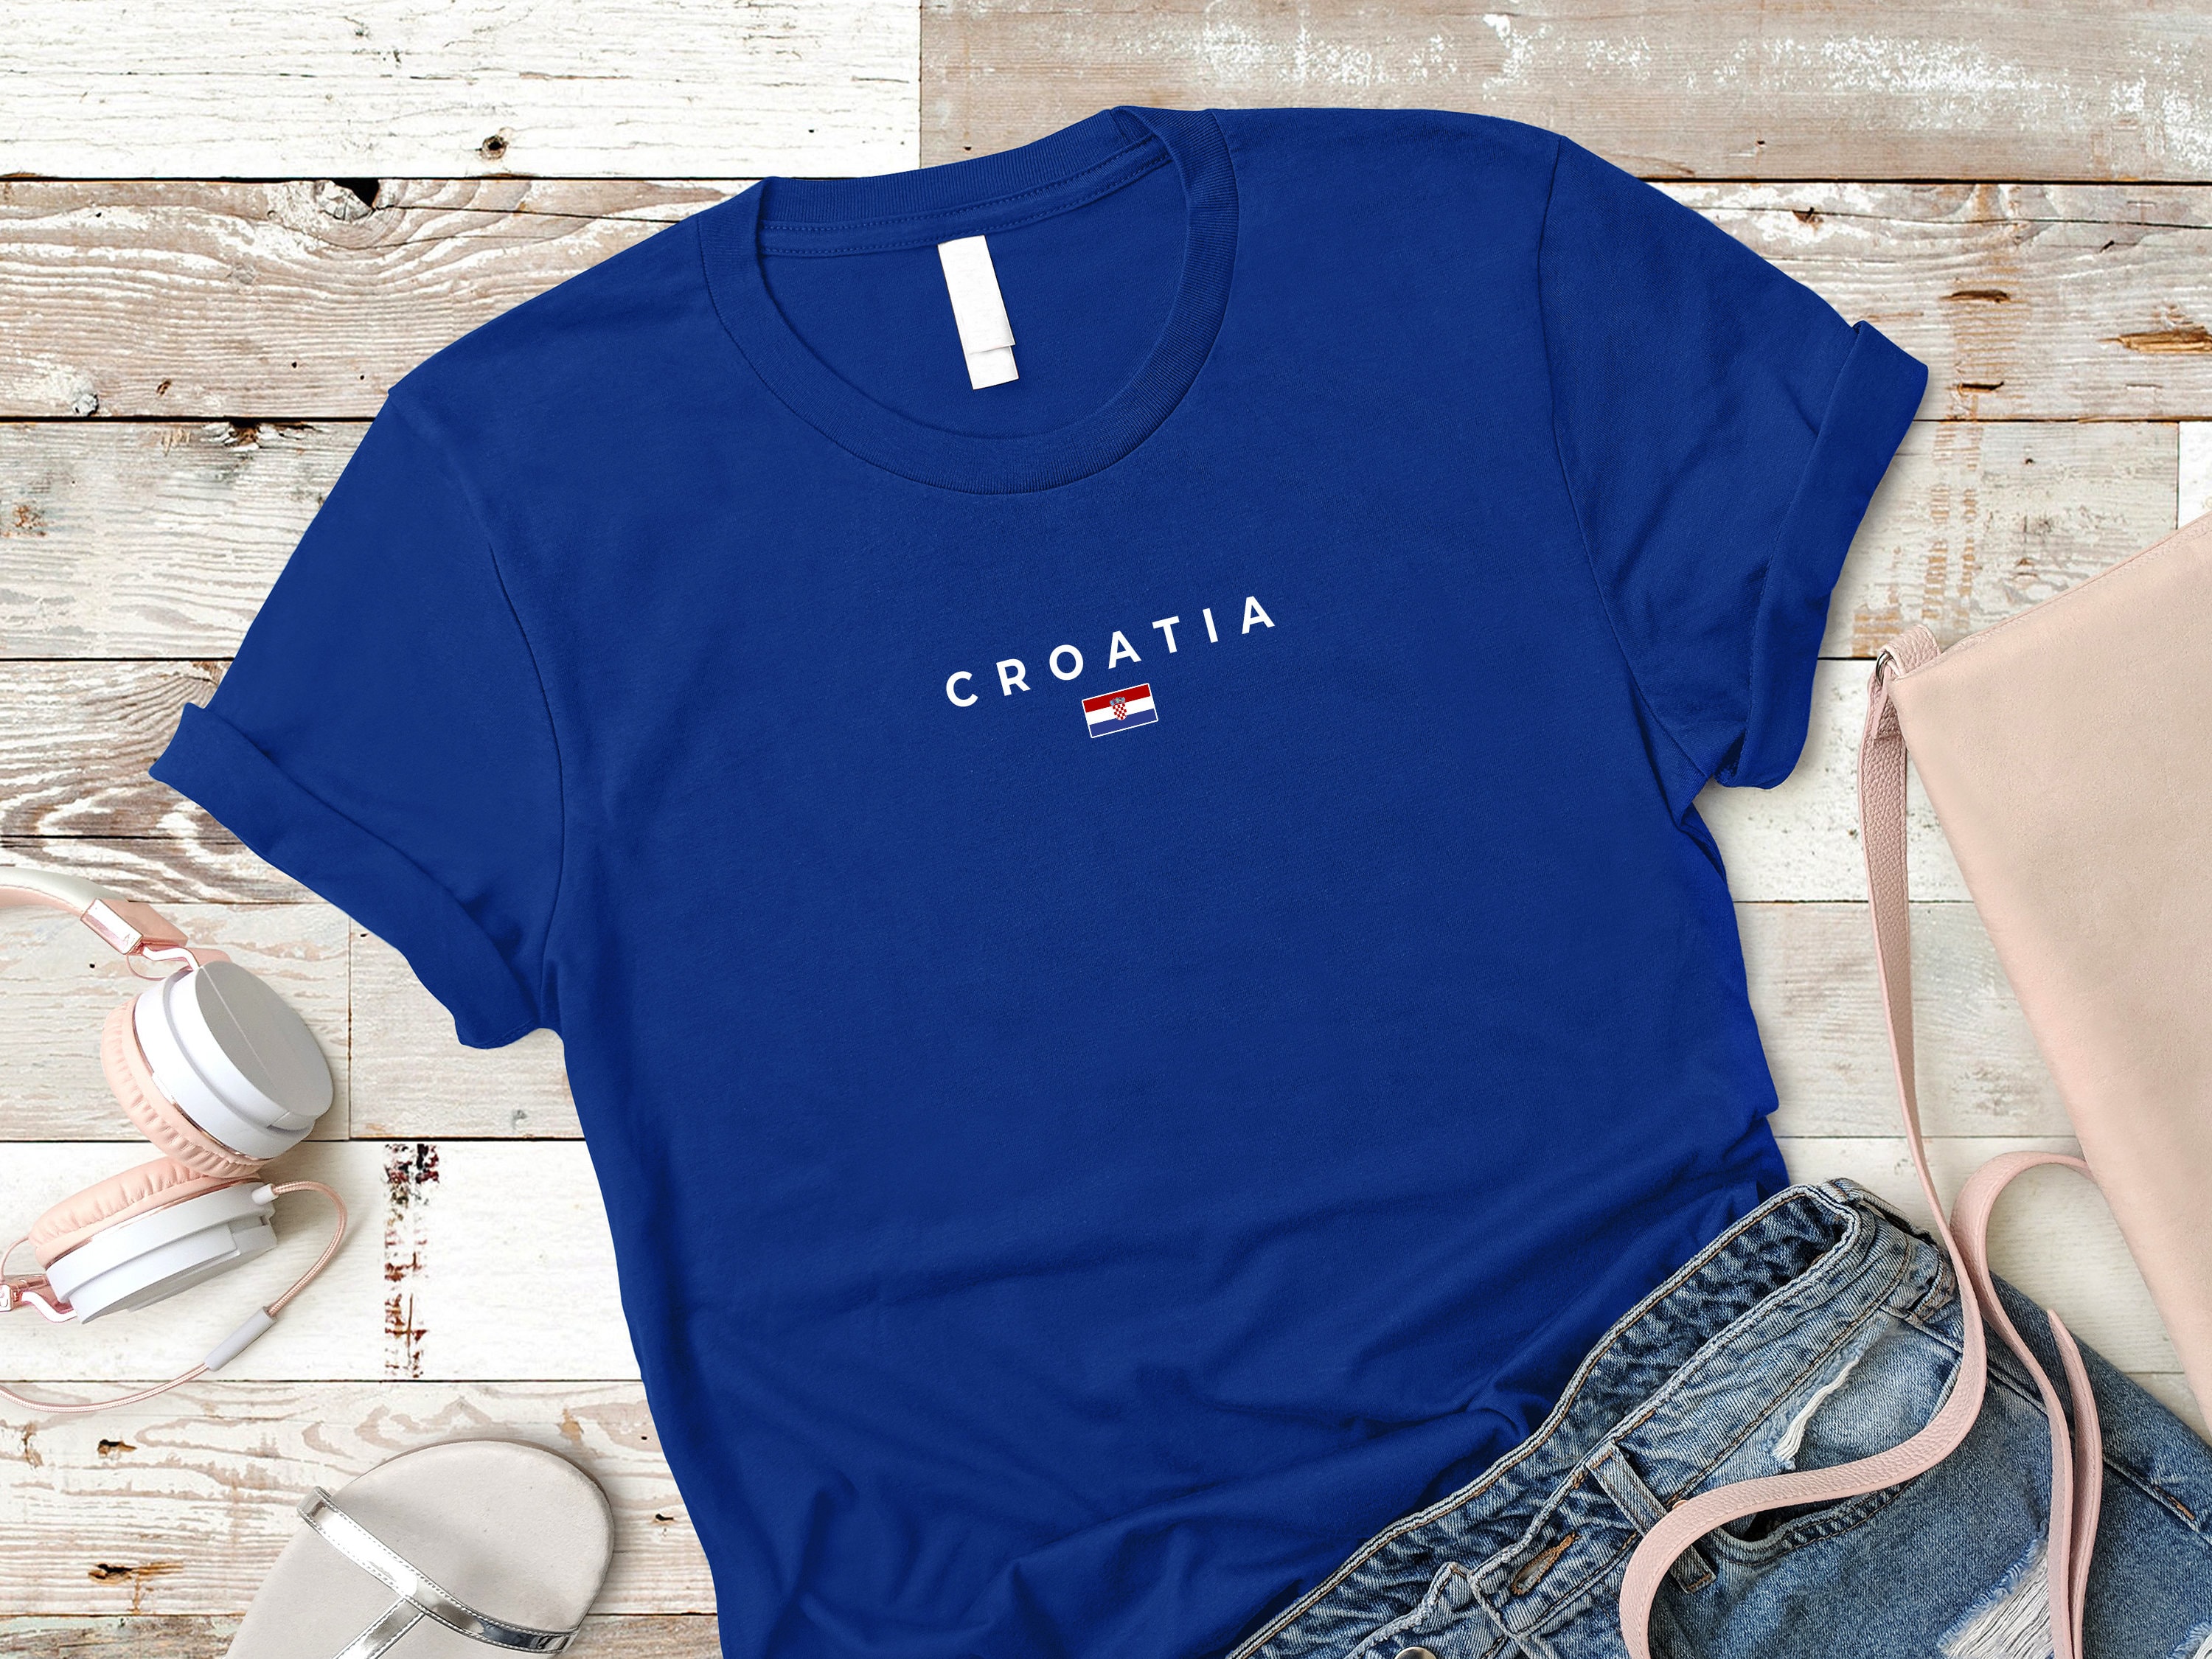 Dalmatia Black White Tshirt For Men Women Hajduk Split Croatia Dalmatia  Dalmacija Hrvatska Adriatic Jadran Coat Of Arms Emblem - T-shirts -  AliExpress